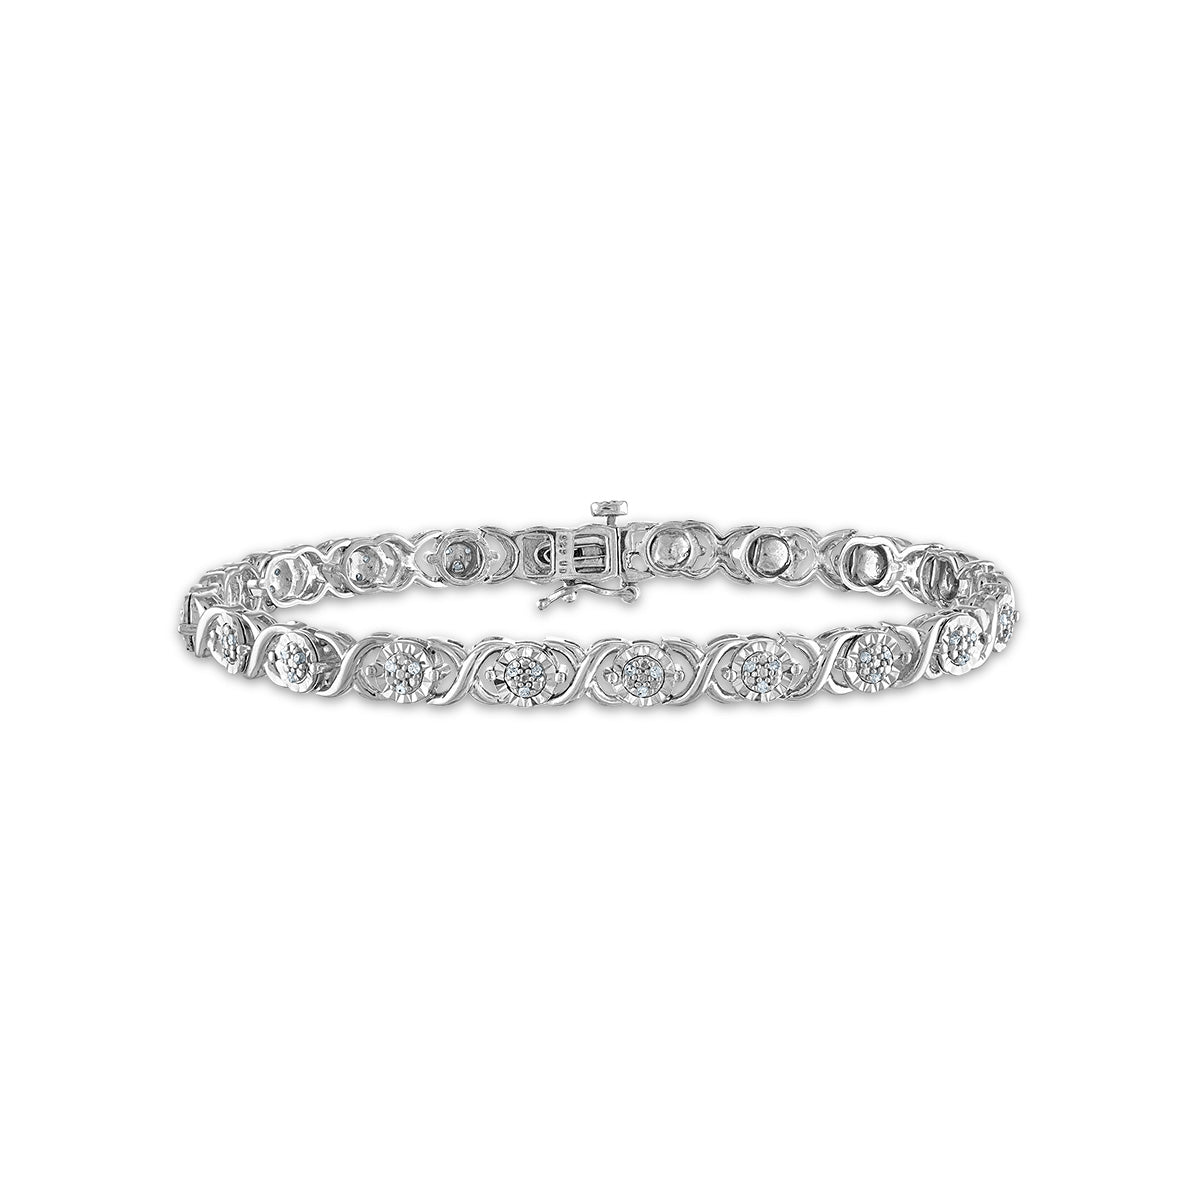 Curb Chain Bracelet in Sterling Silver with Diamonds, 7mm | David Yurman